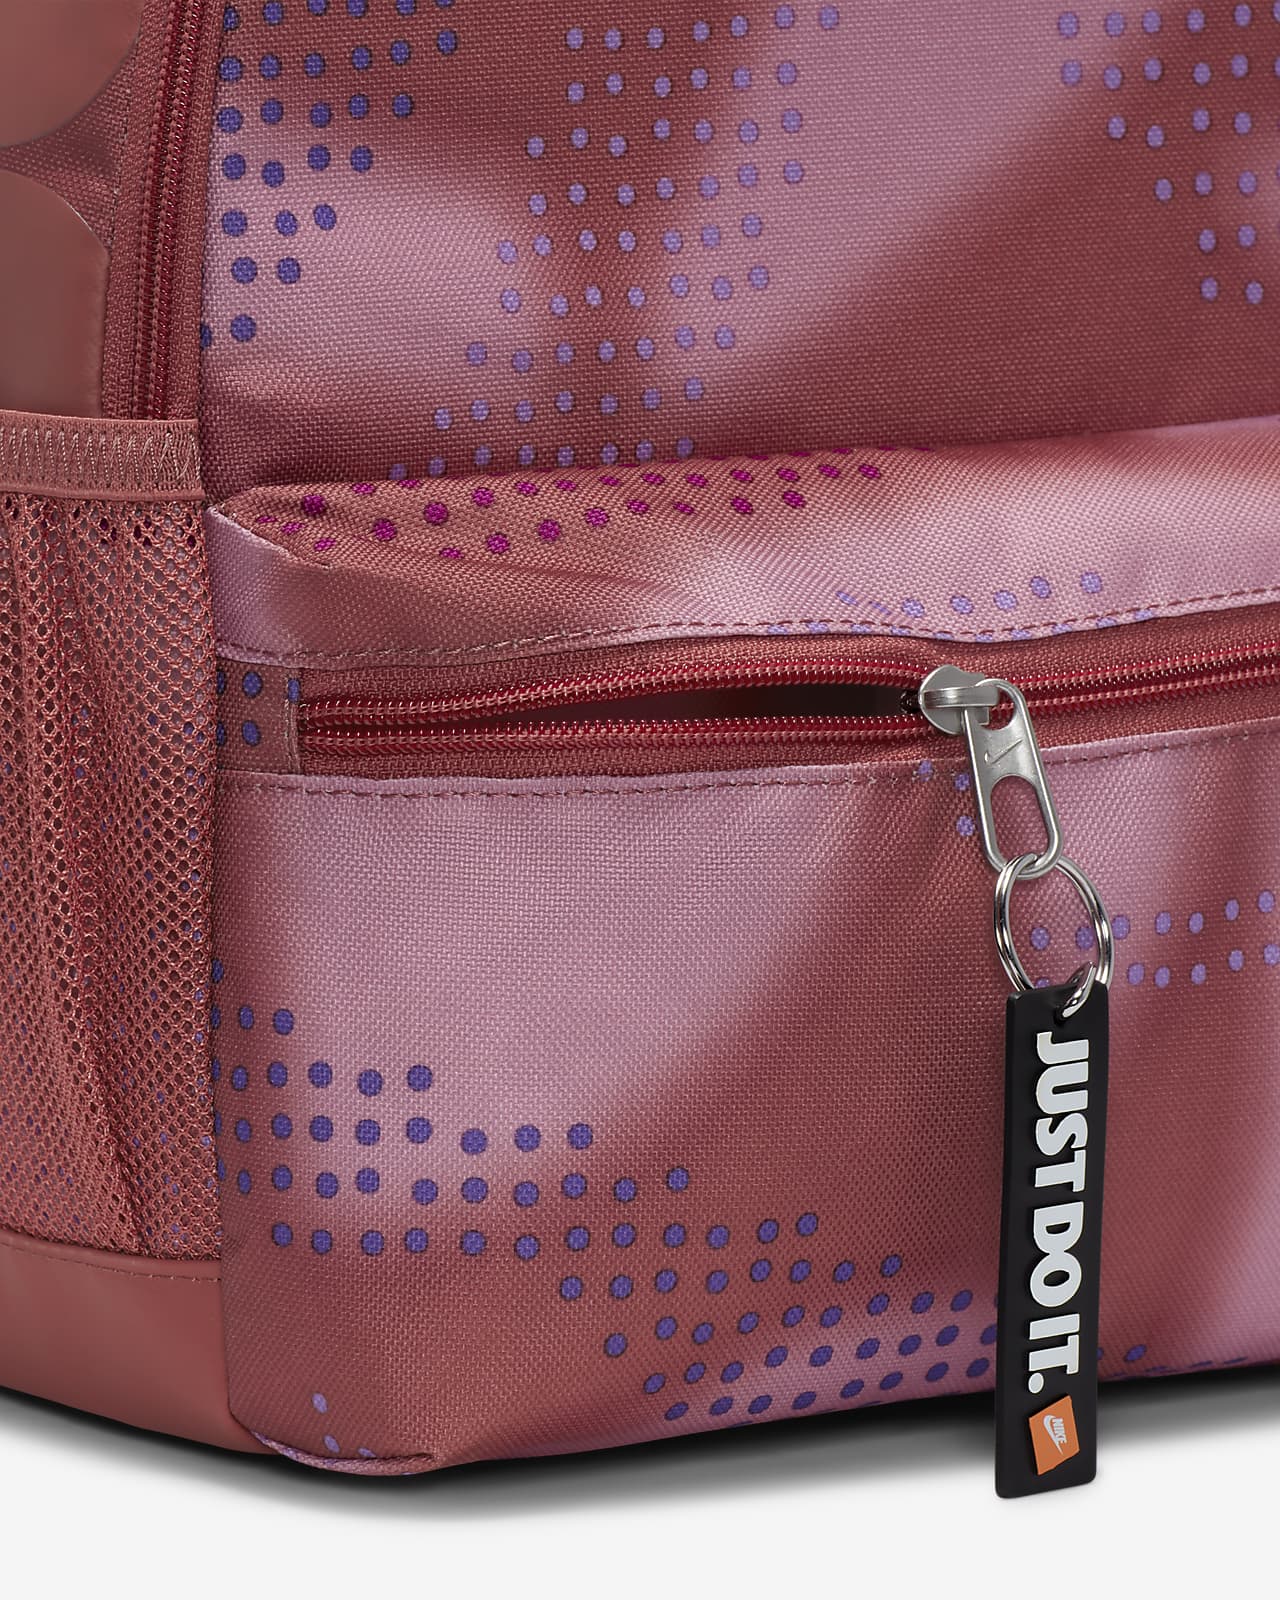 Brown Status Icons Mini Backpack Keychain